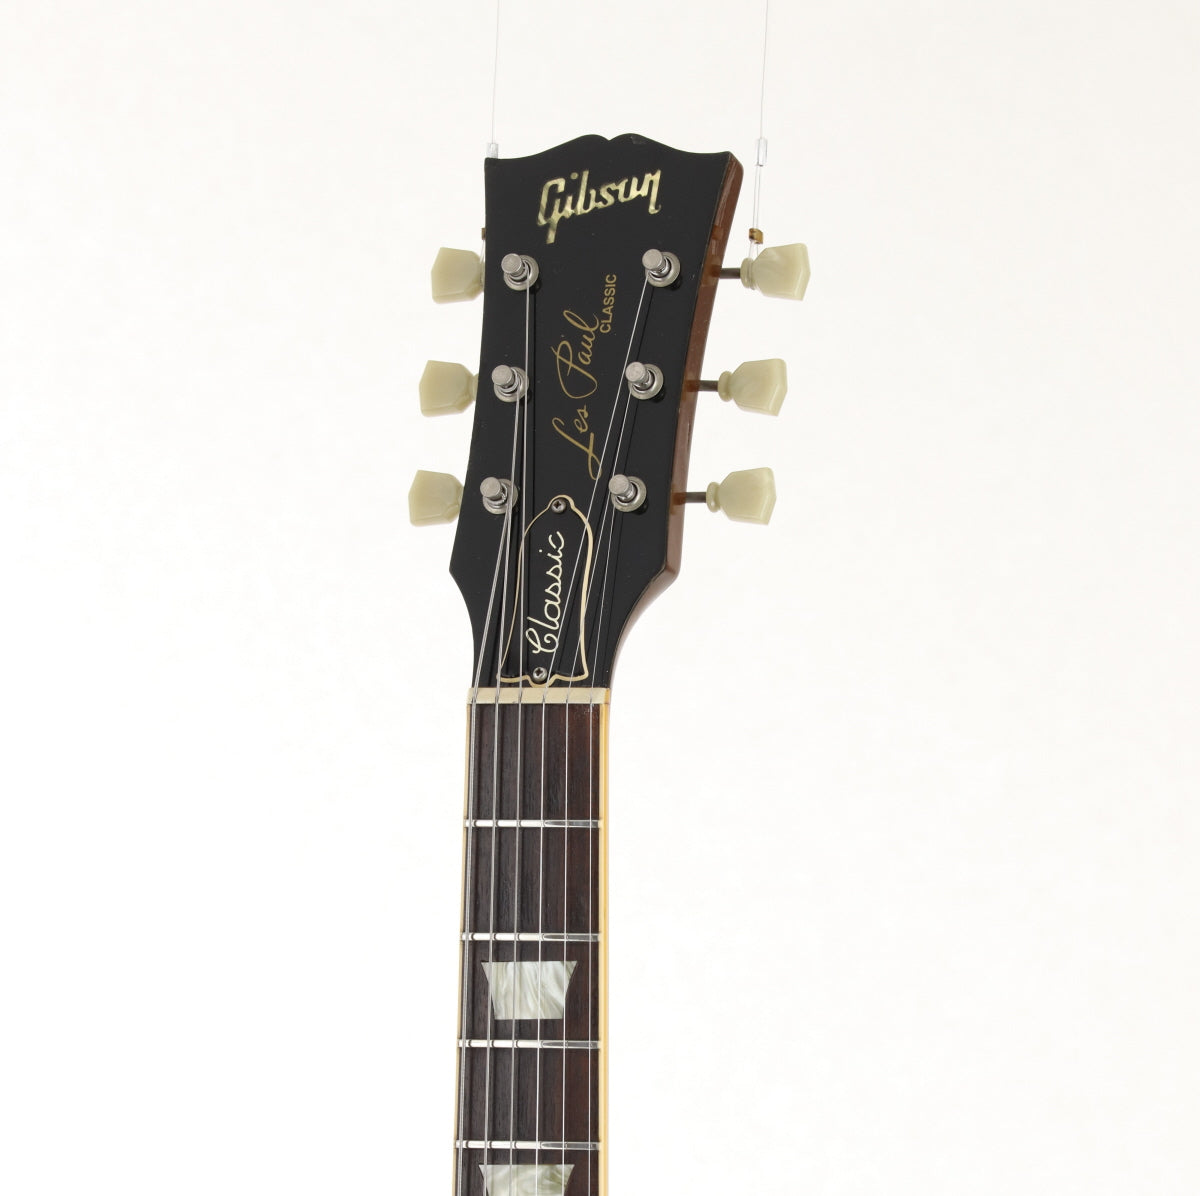 [SN 4 2845] USED Gibson / Les Paul Classic Honey Burst 1994 [08]